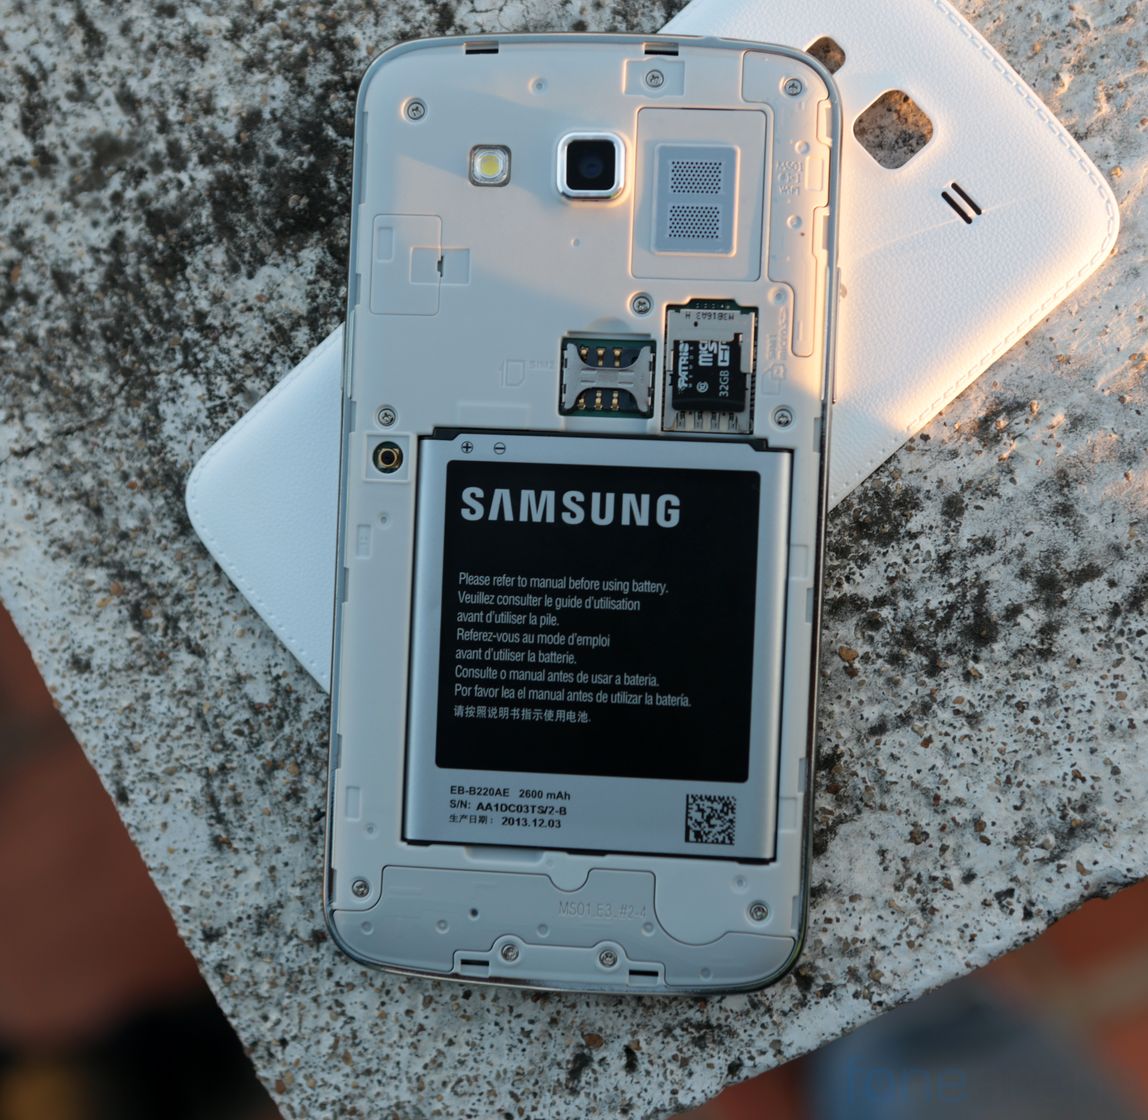 Samsung Galaxy Grand 2 Review – Grand Successor